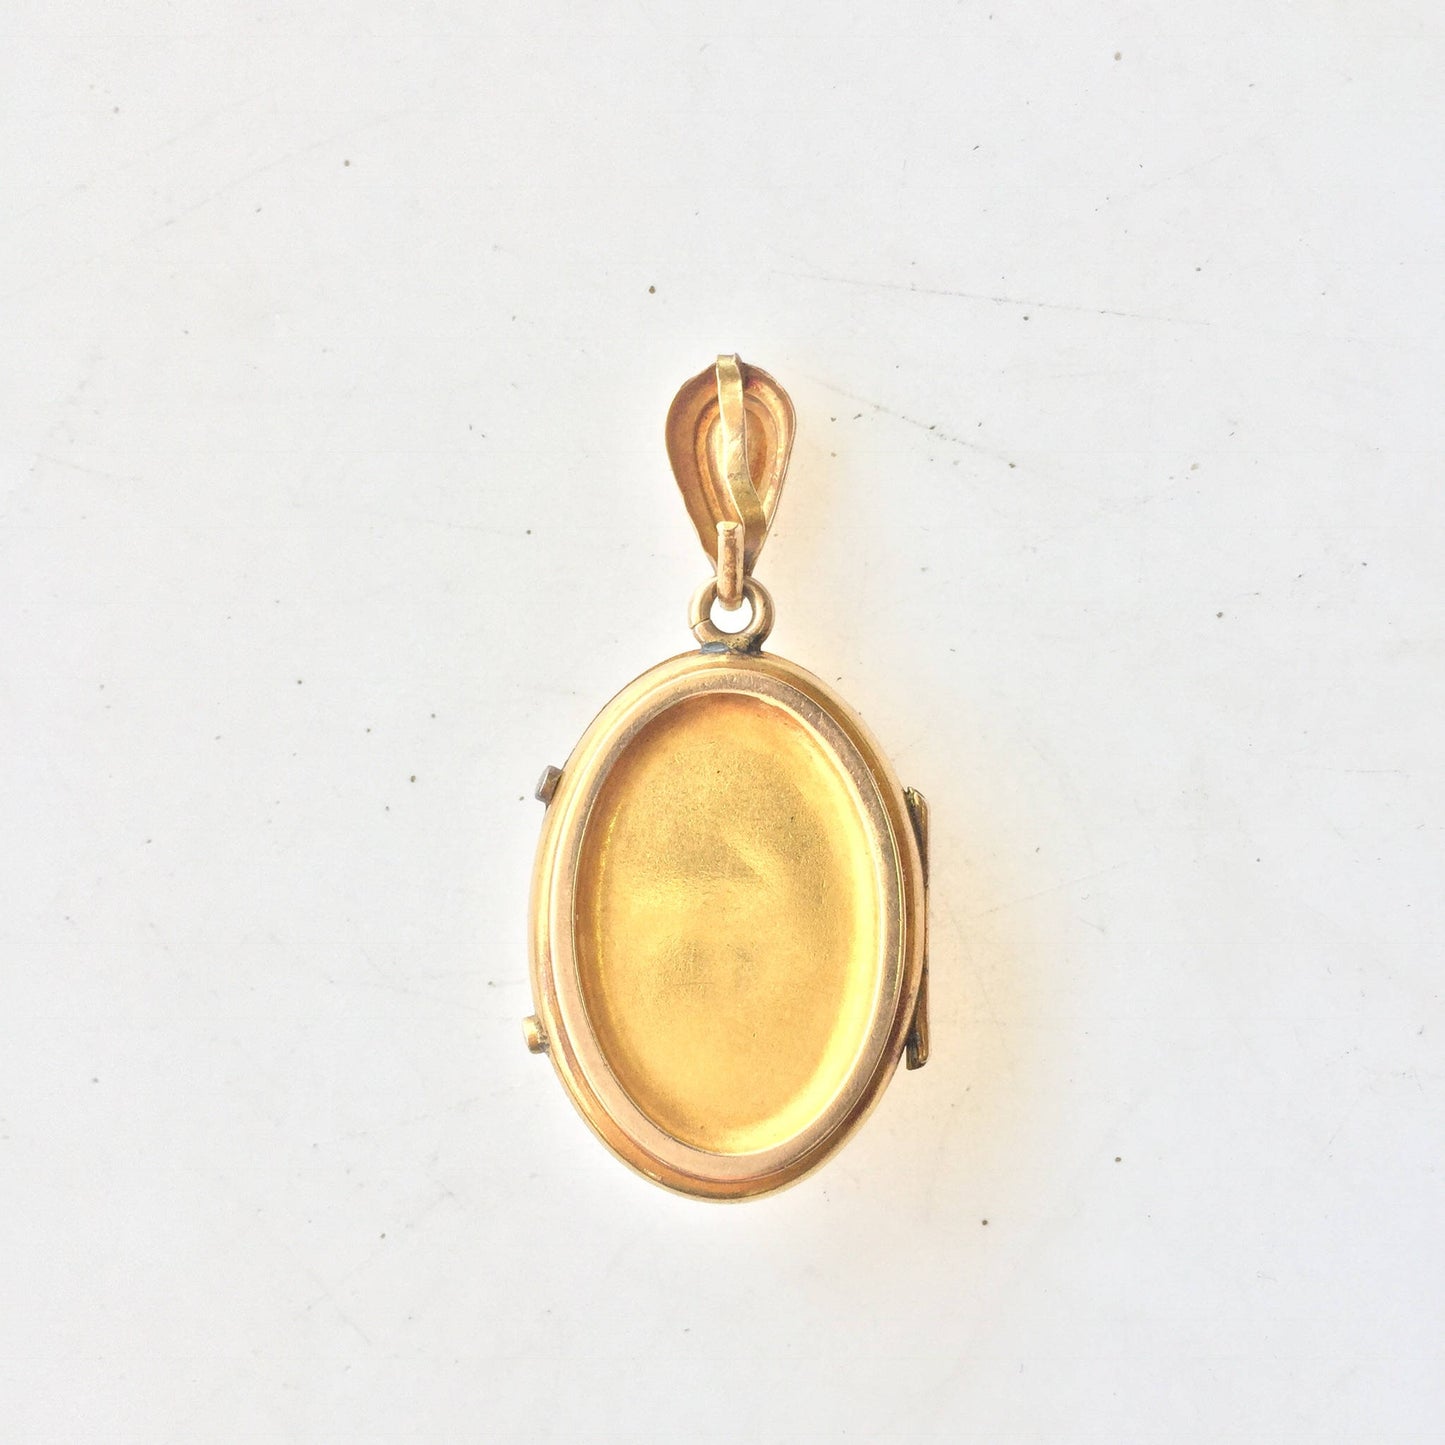 10 karat gold Victorian oval locket pendant charm necklace keepsake gift